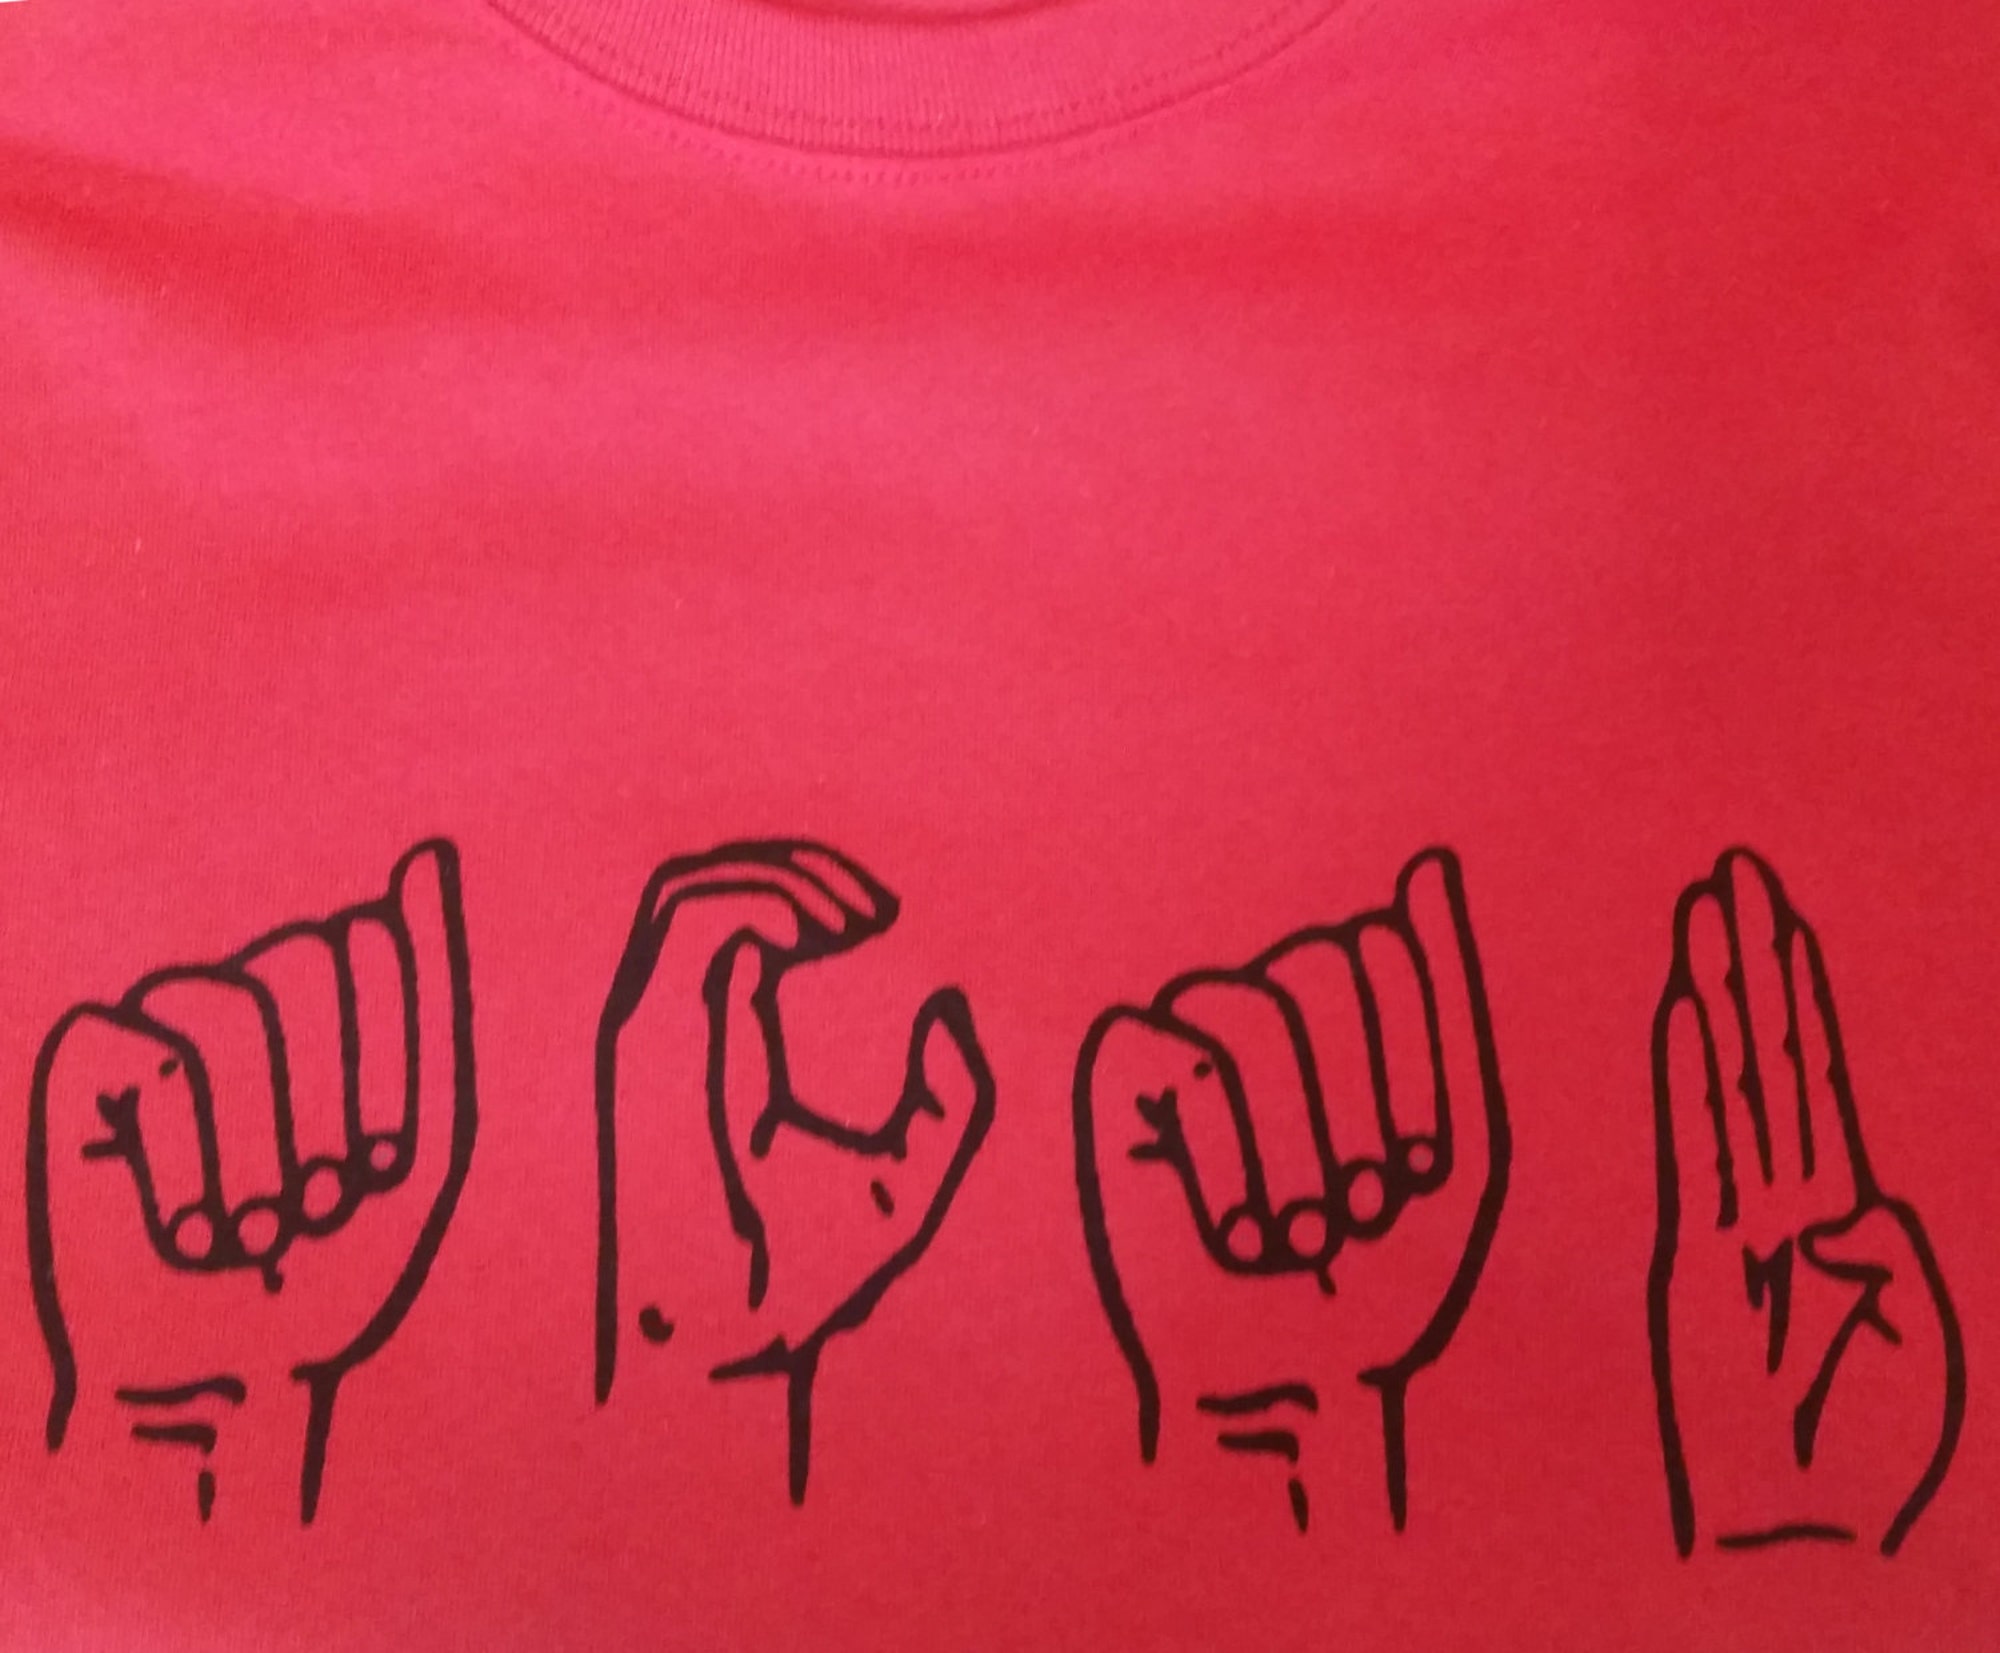 A.C.A.B t-shirt in International Sign Language